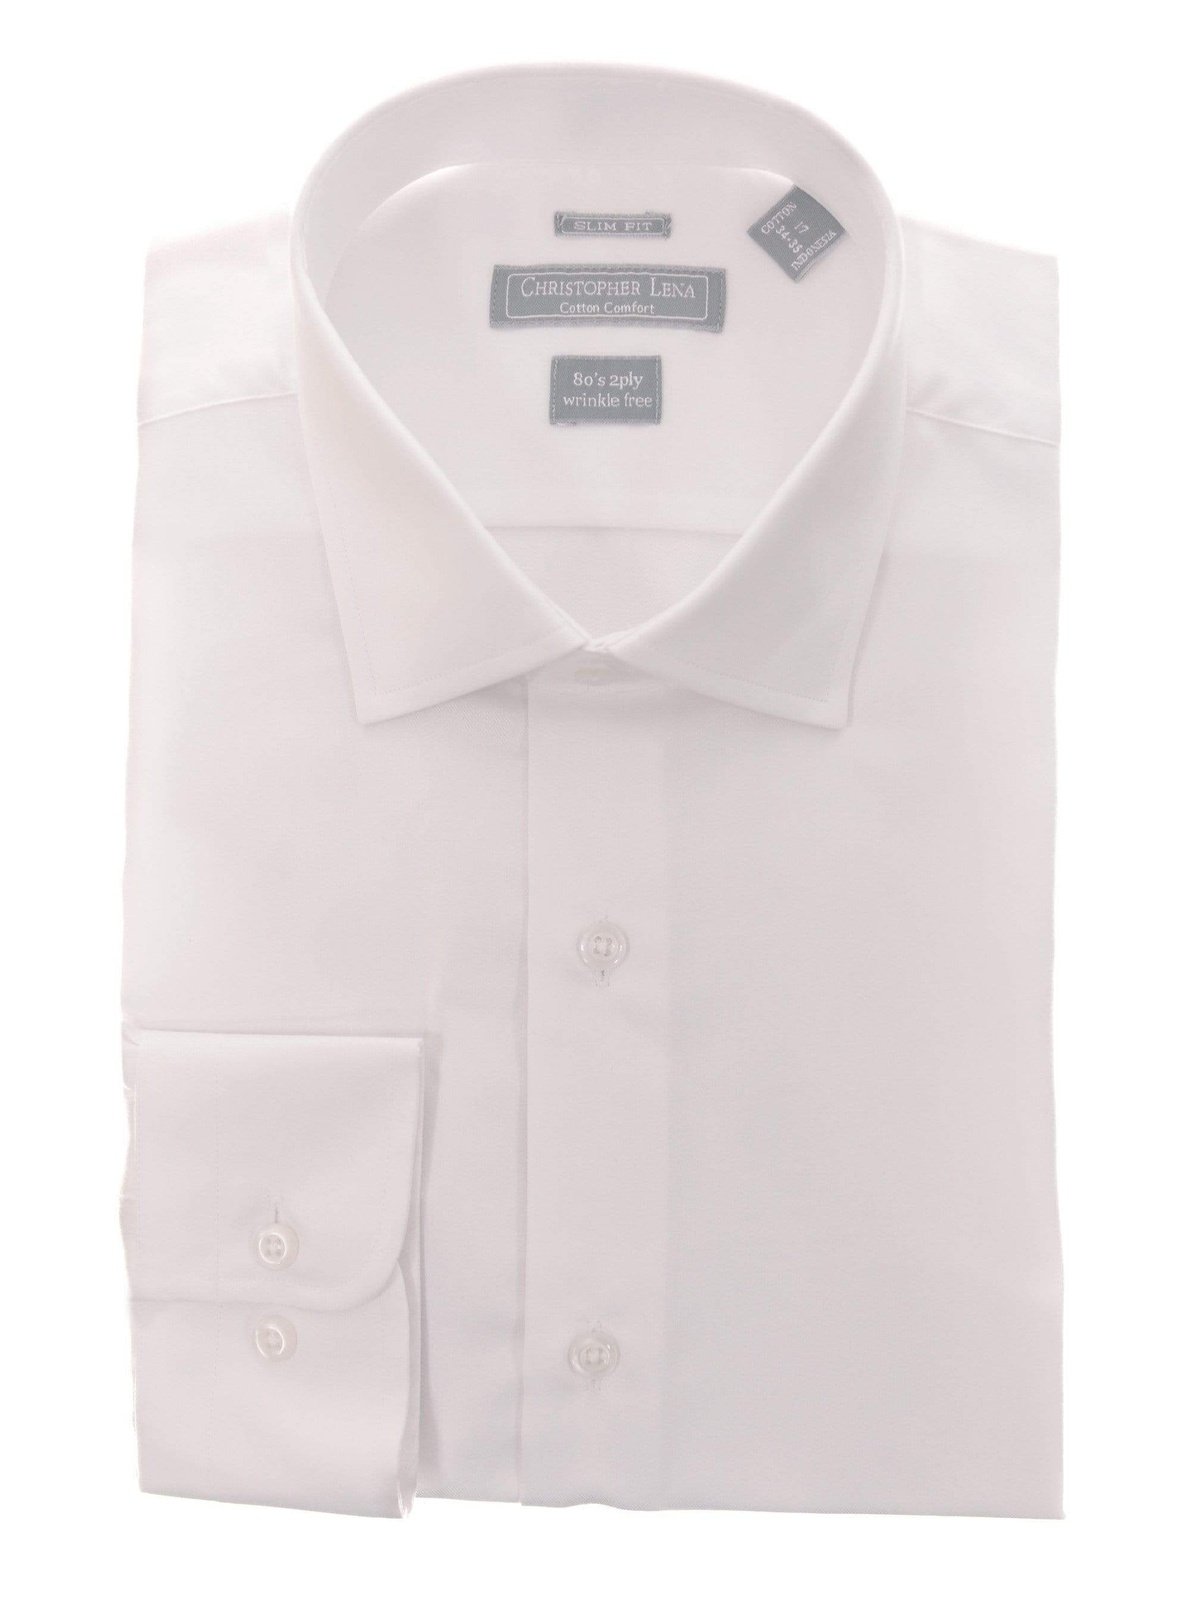 C.L. Shirts SHIRTS Men's Slim Fit Solid White Spread Collar Wrinkle Free 100% Cotton Dress Shirt